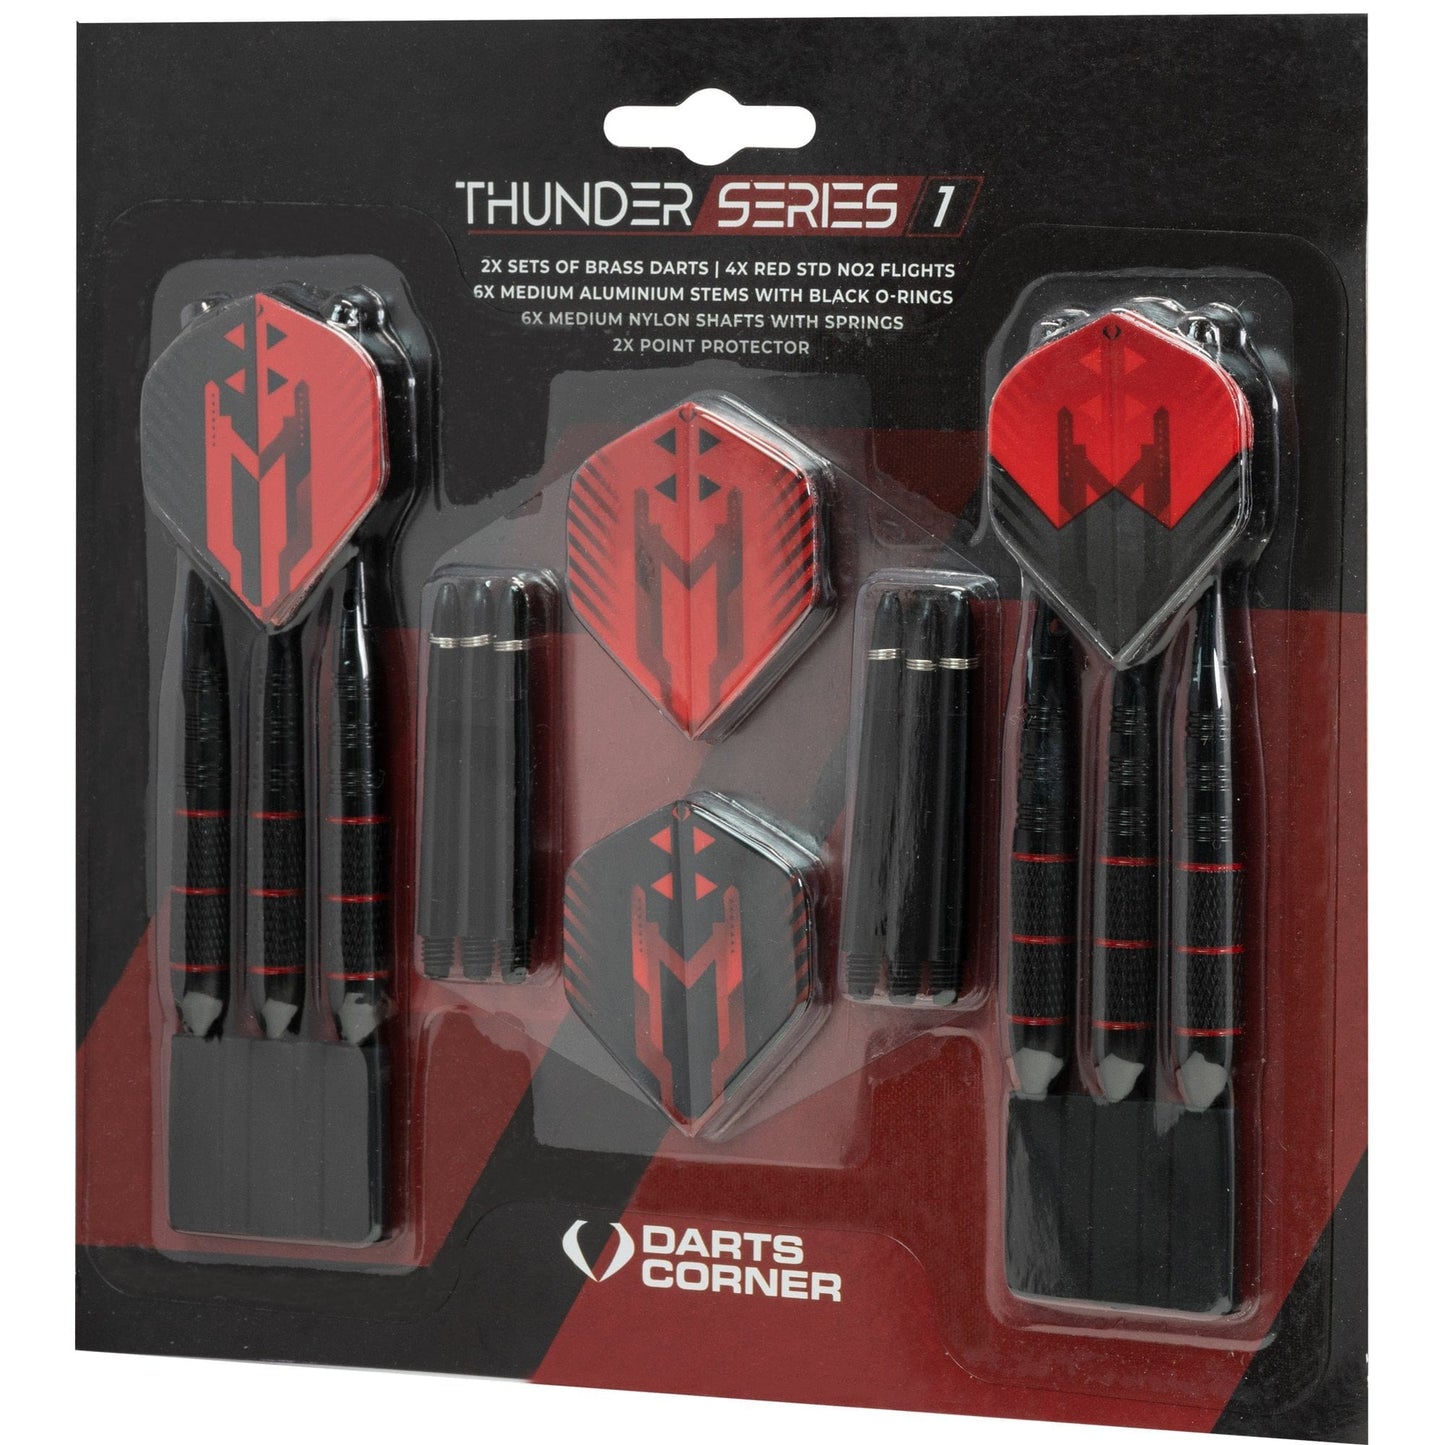 Darts Corner - Thunder Series 1 - Steel Tip Brass - 2 Sets Darts - M1 - Black & Red - 22g 22g